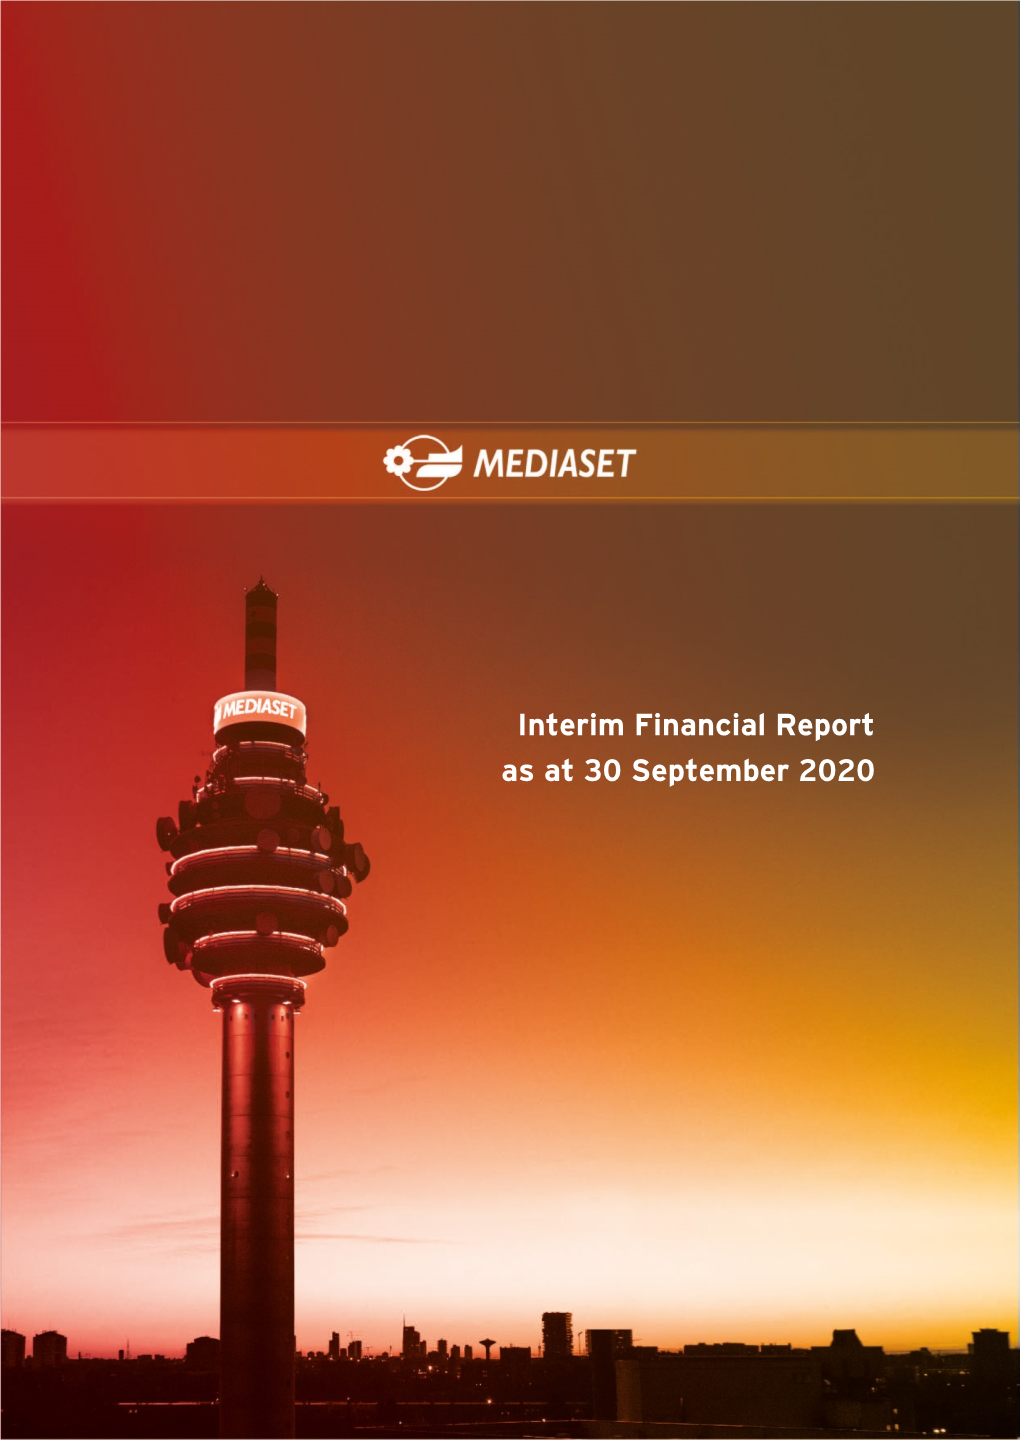 Mediaset Group: Financial Highlights